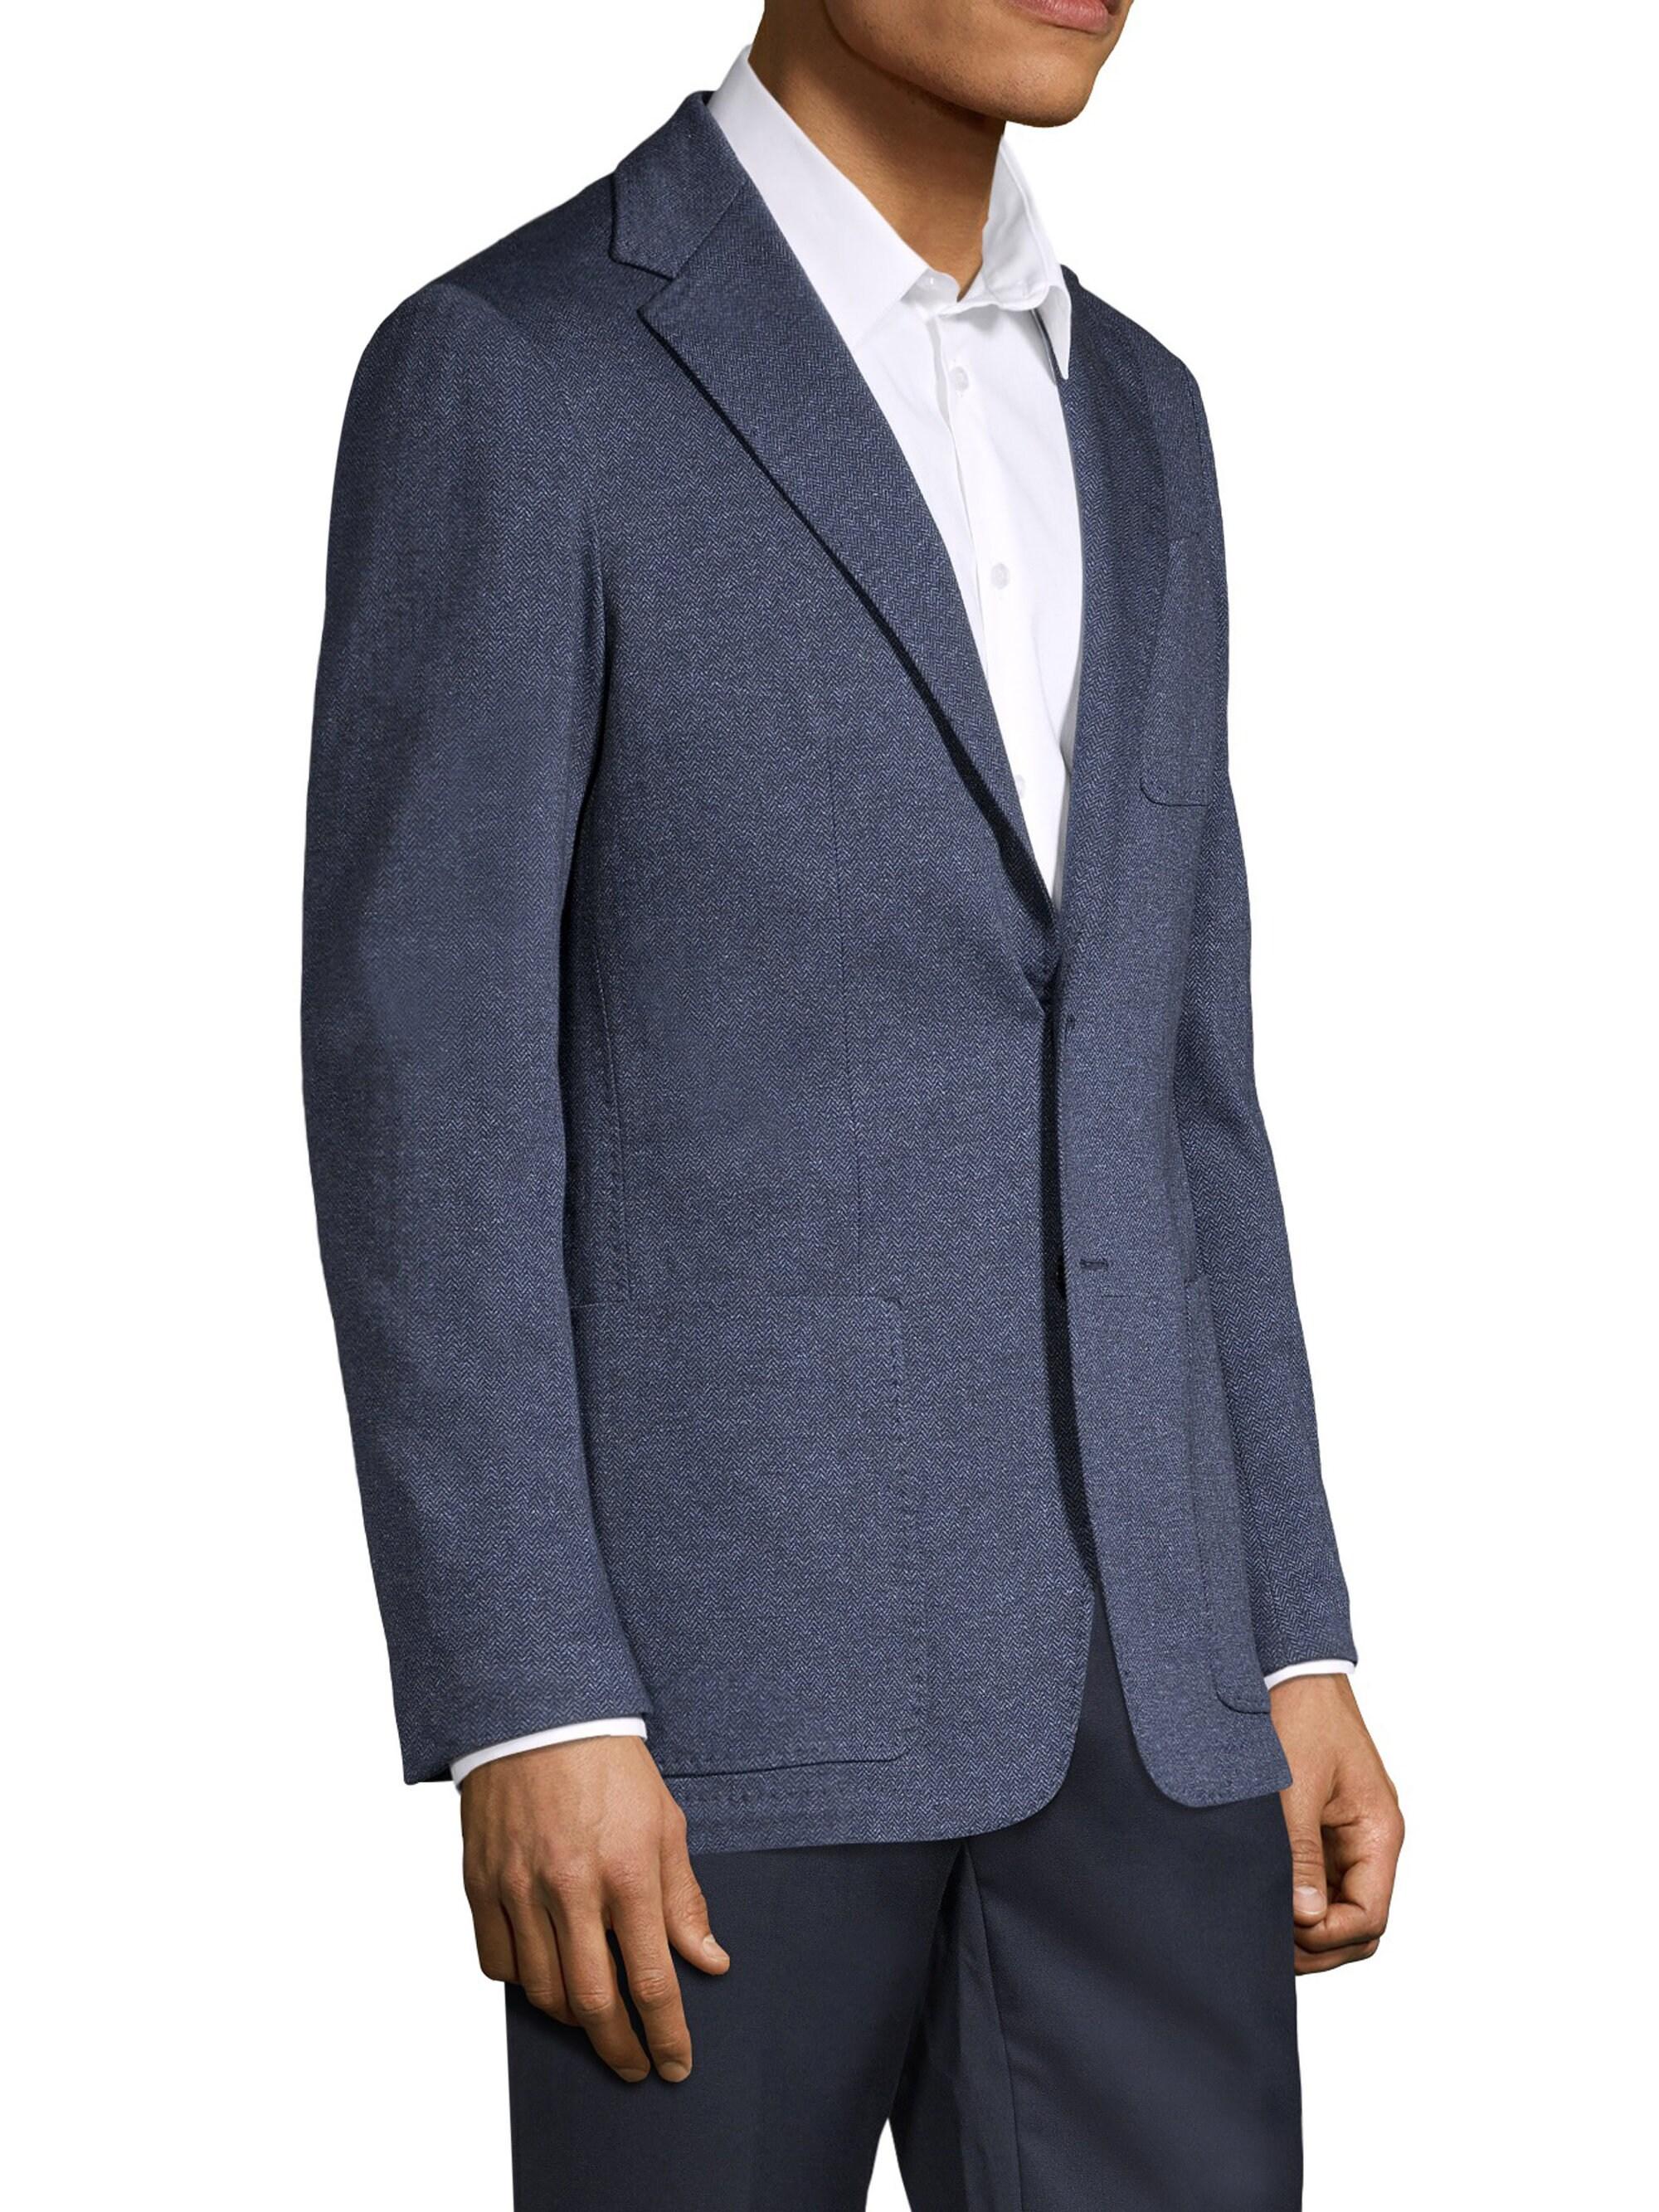 Canali Regular-fit Chevron Wool Sports Jacket for Men - Lyst